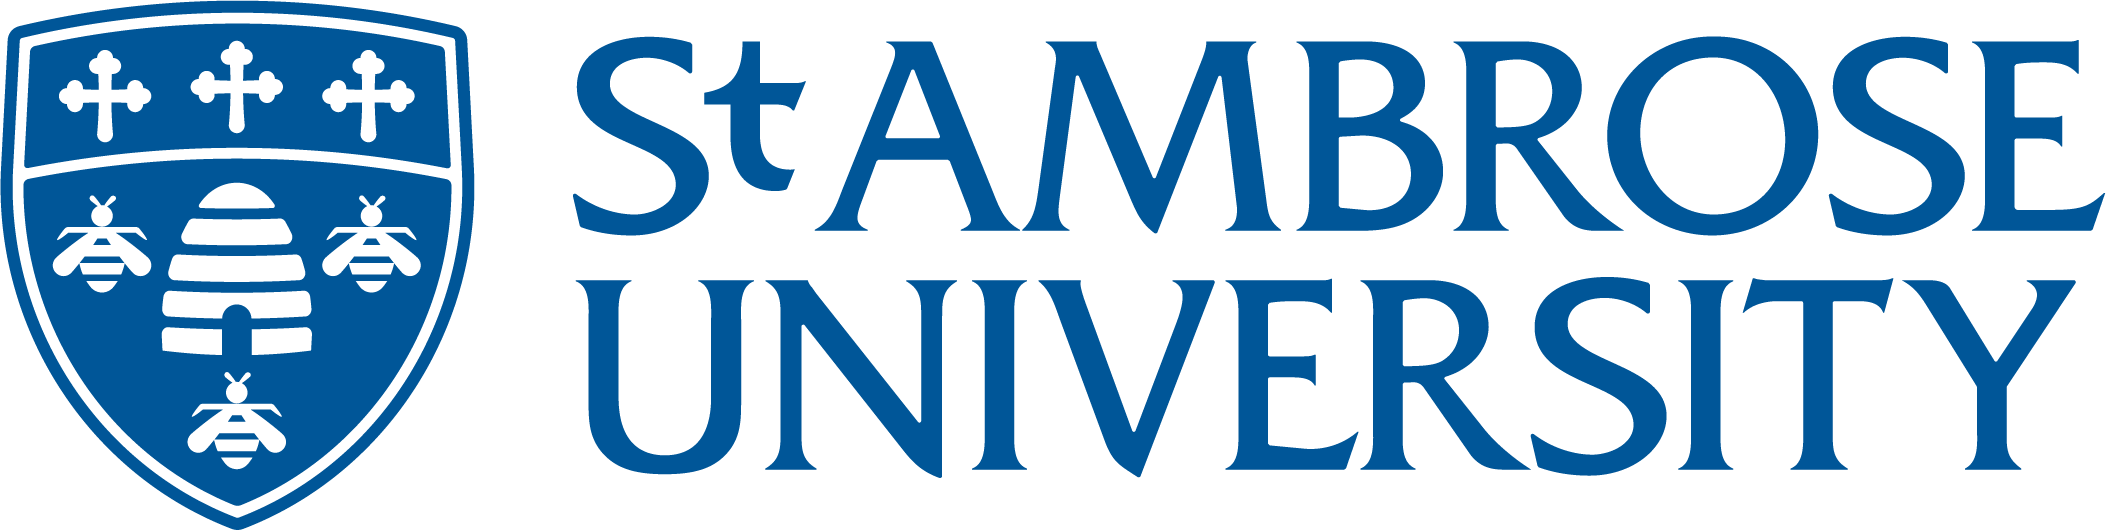 st ambrose university new logo